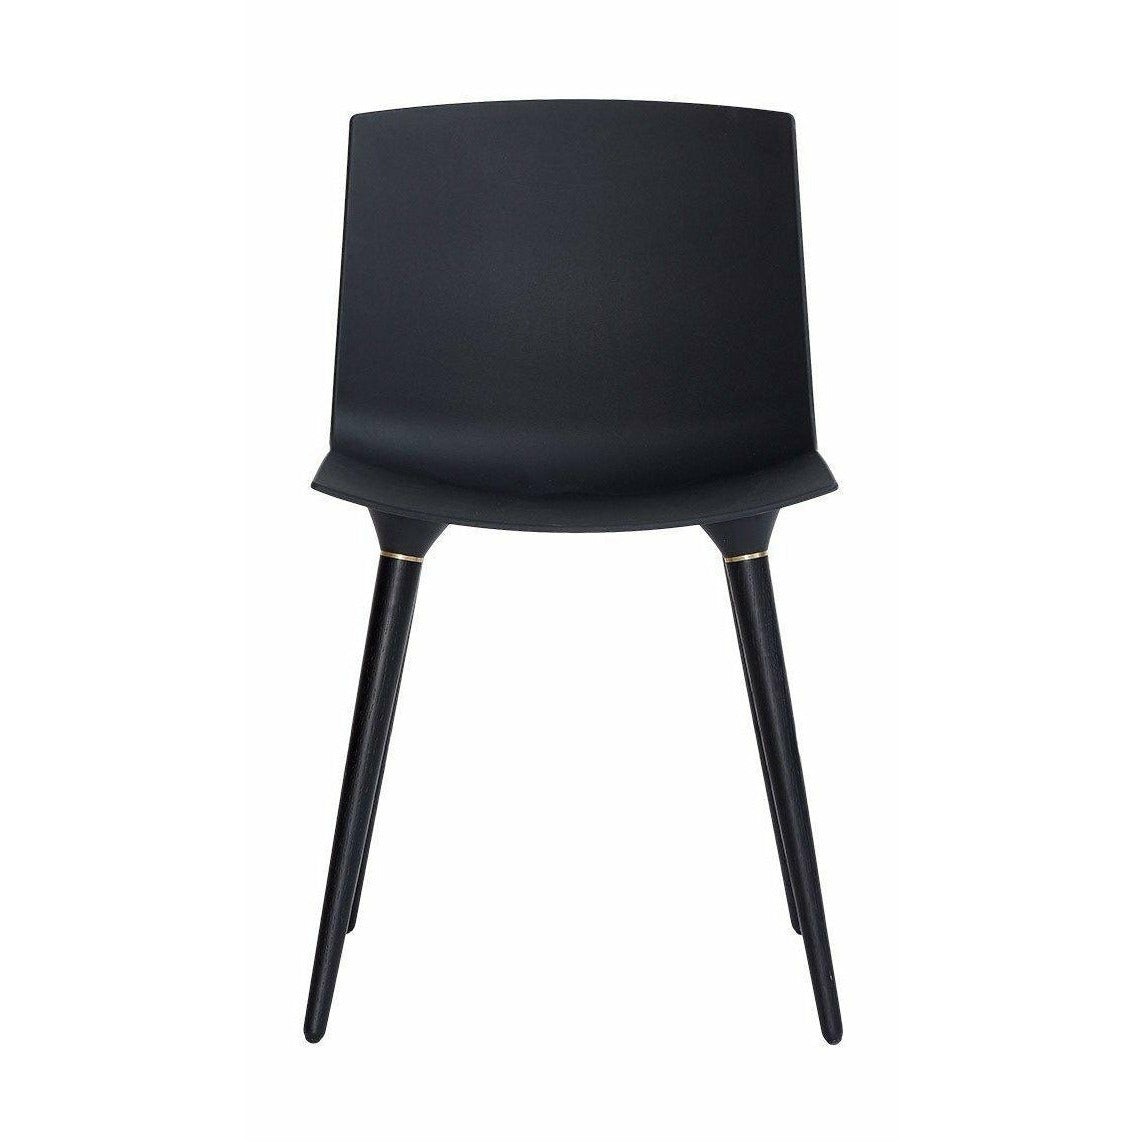 Andersen Furniture TAC -stol svart ek, svart plaststol